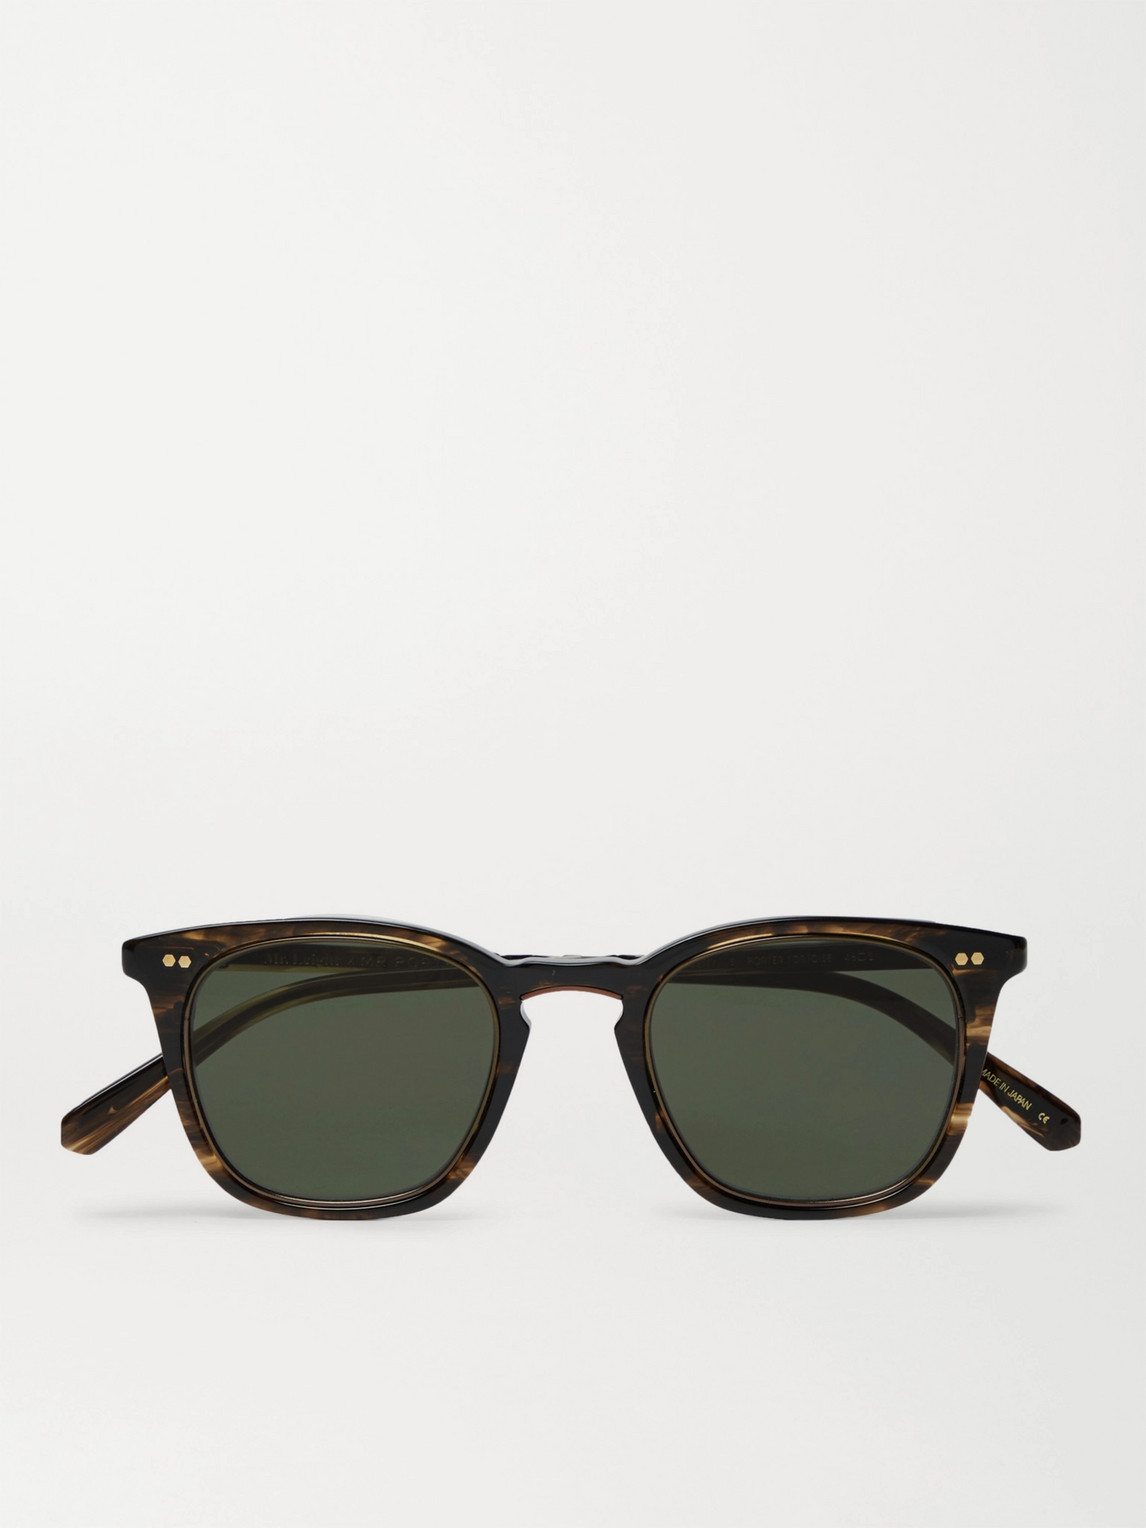 Mr Leight Getty S Square-frame Tortoiseshell Acetate Sunglasses